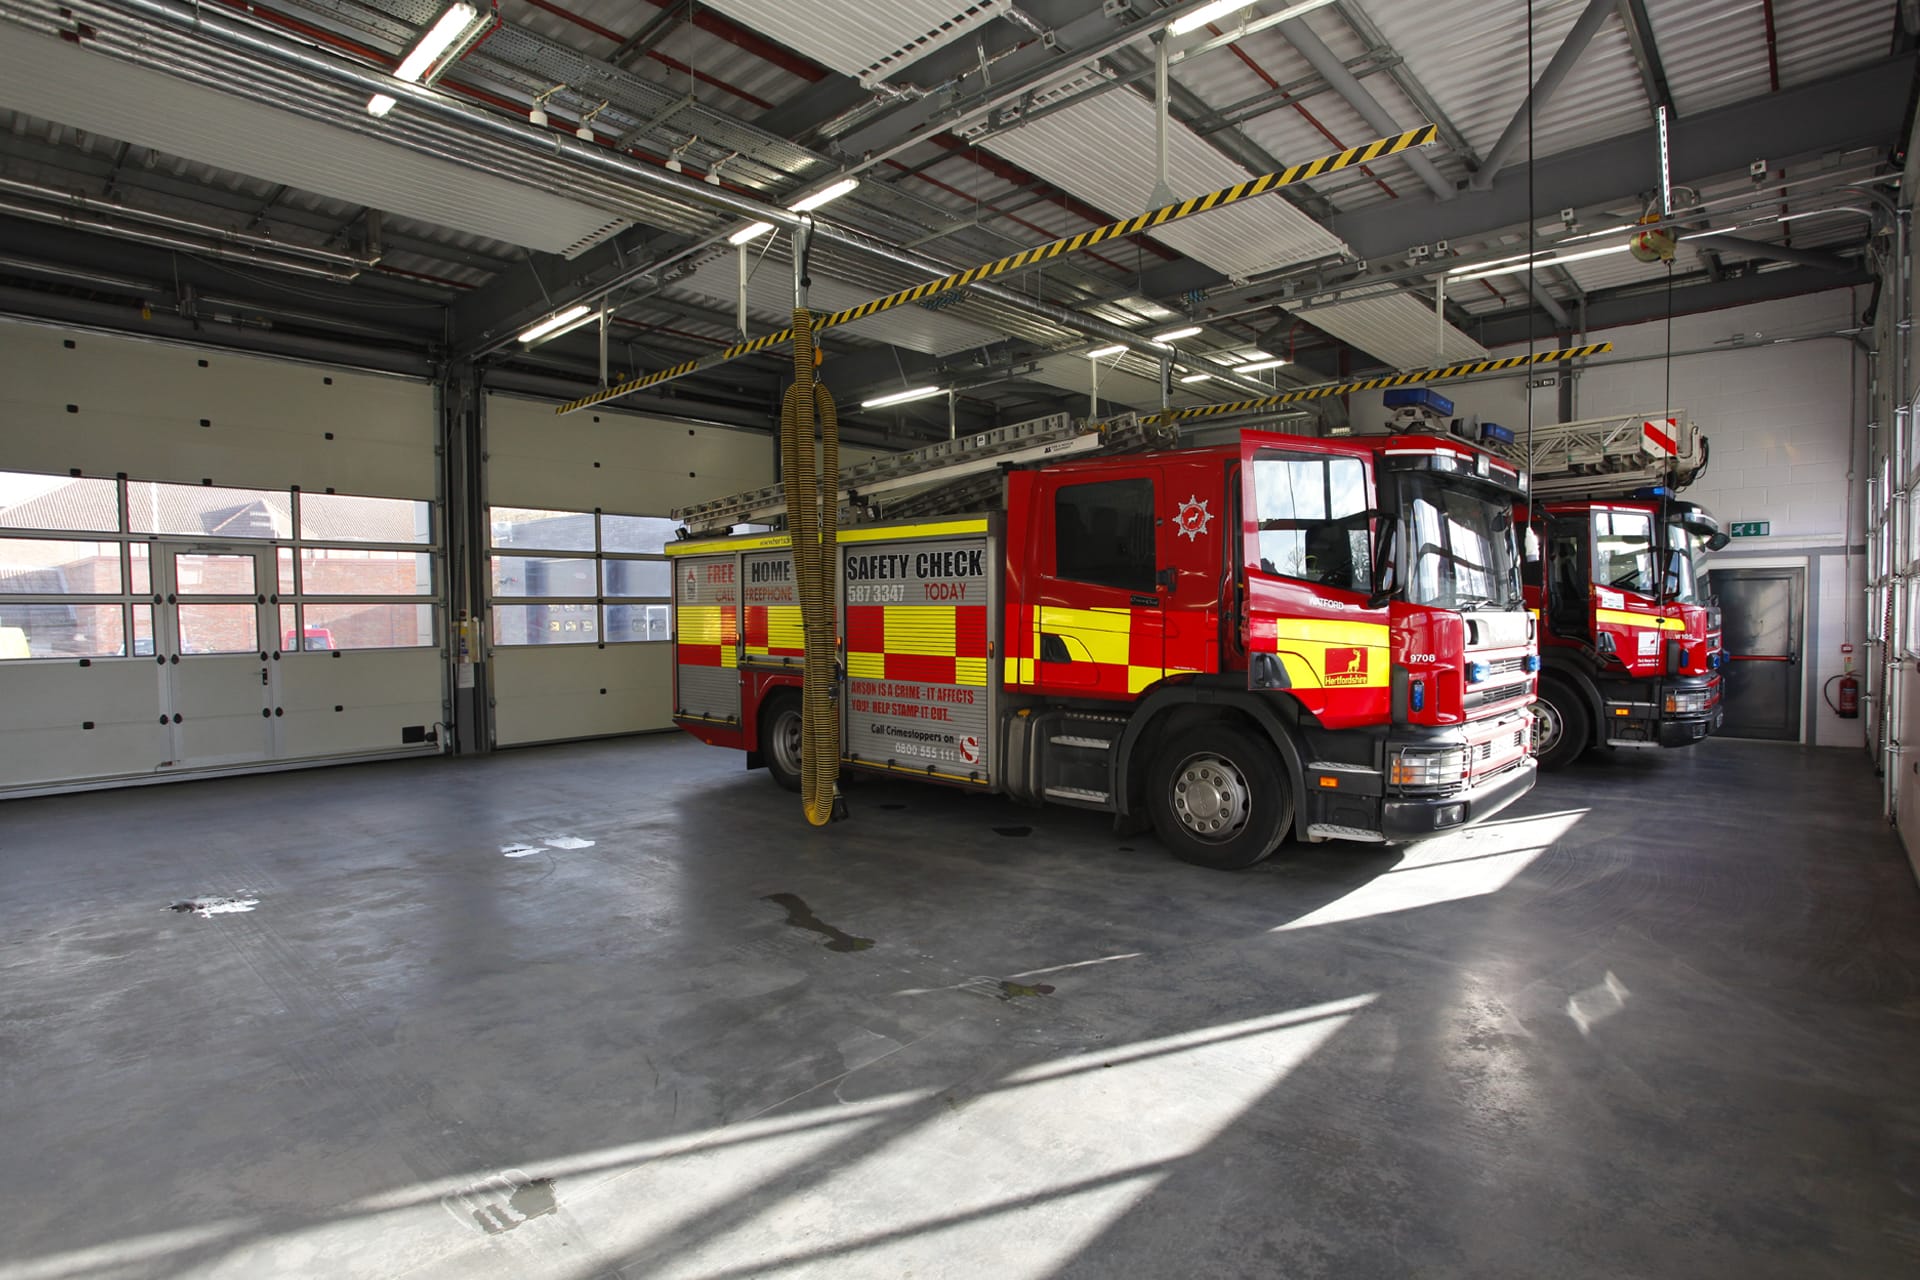 Watford Fire Station 3 bays fire appliance bay